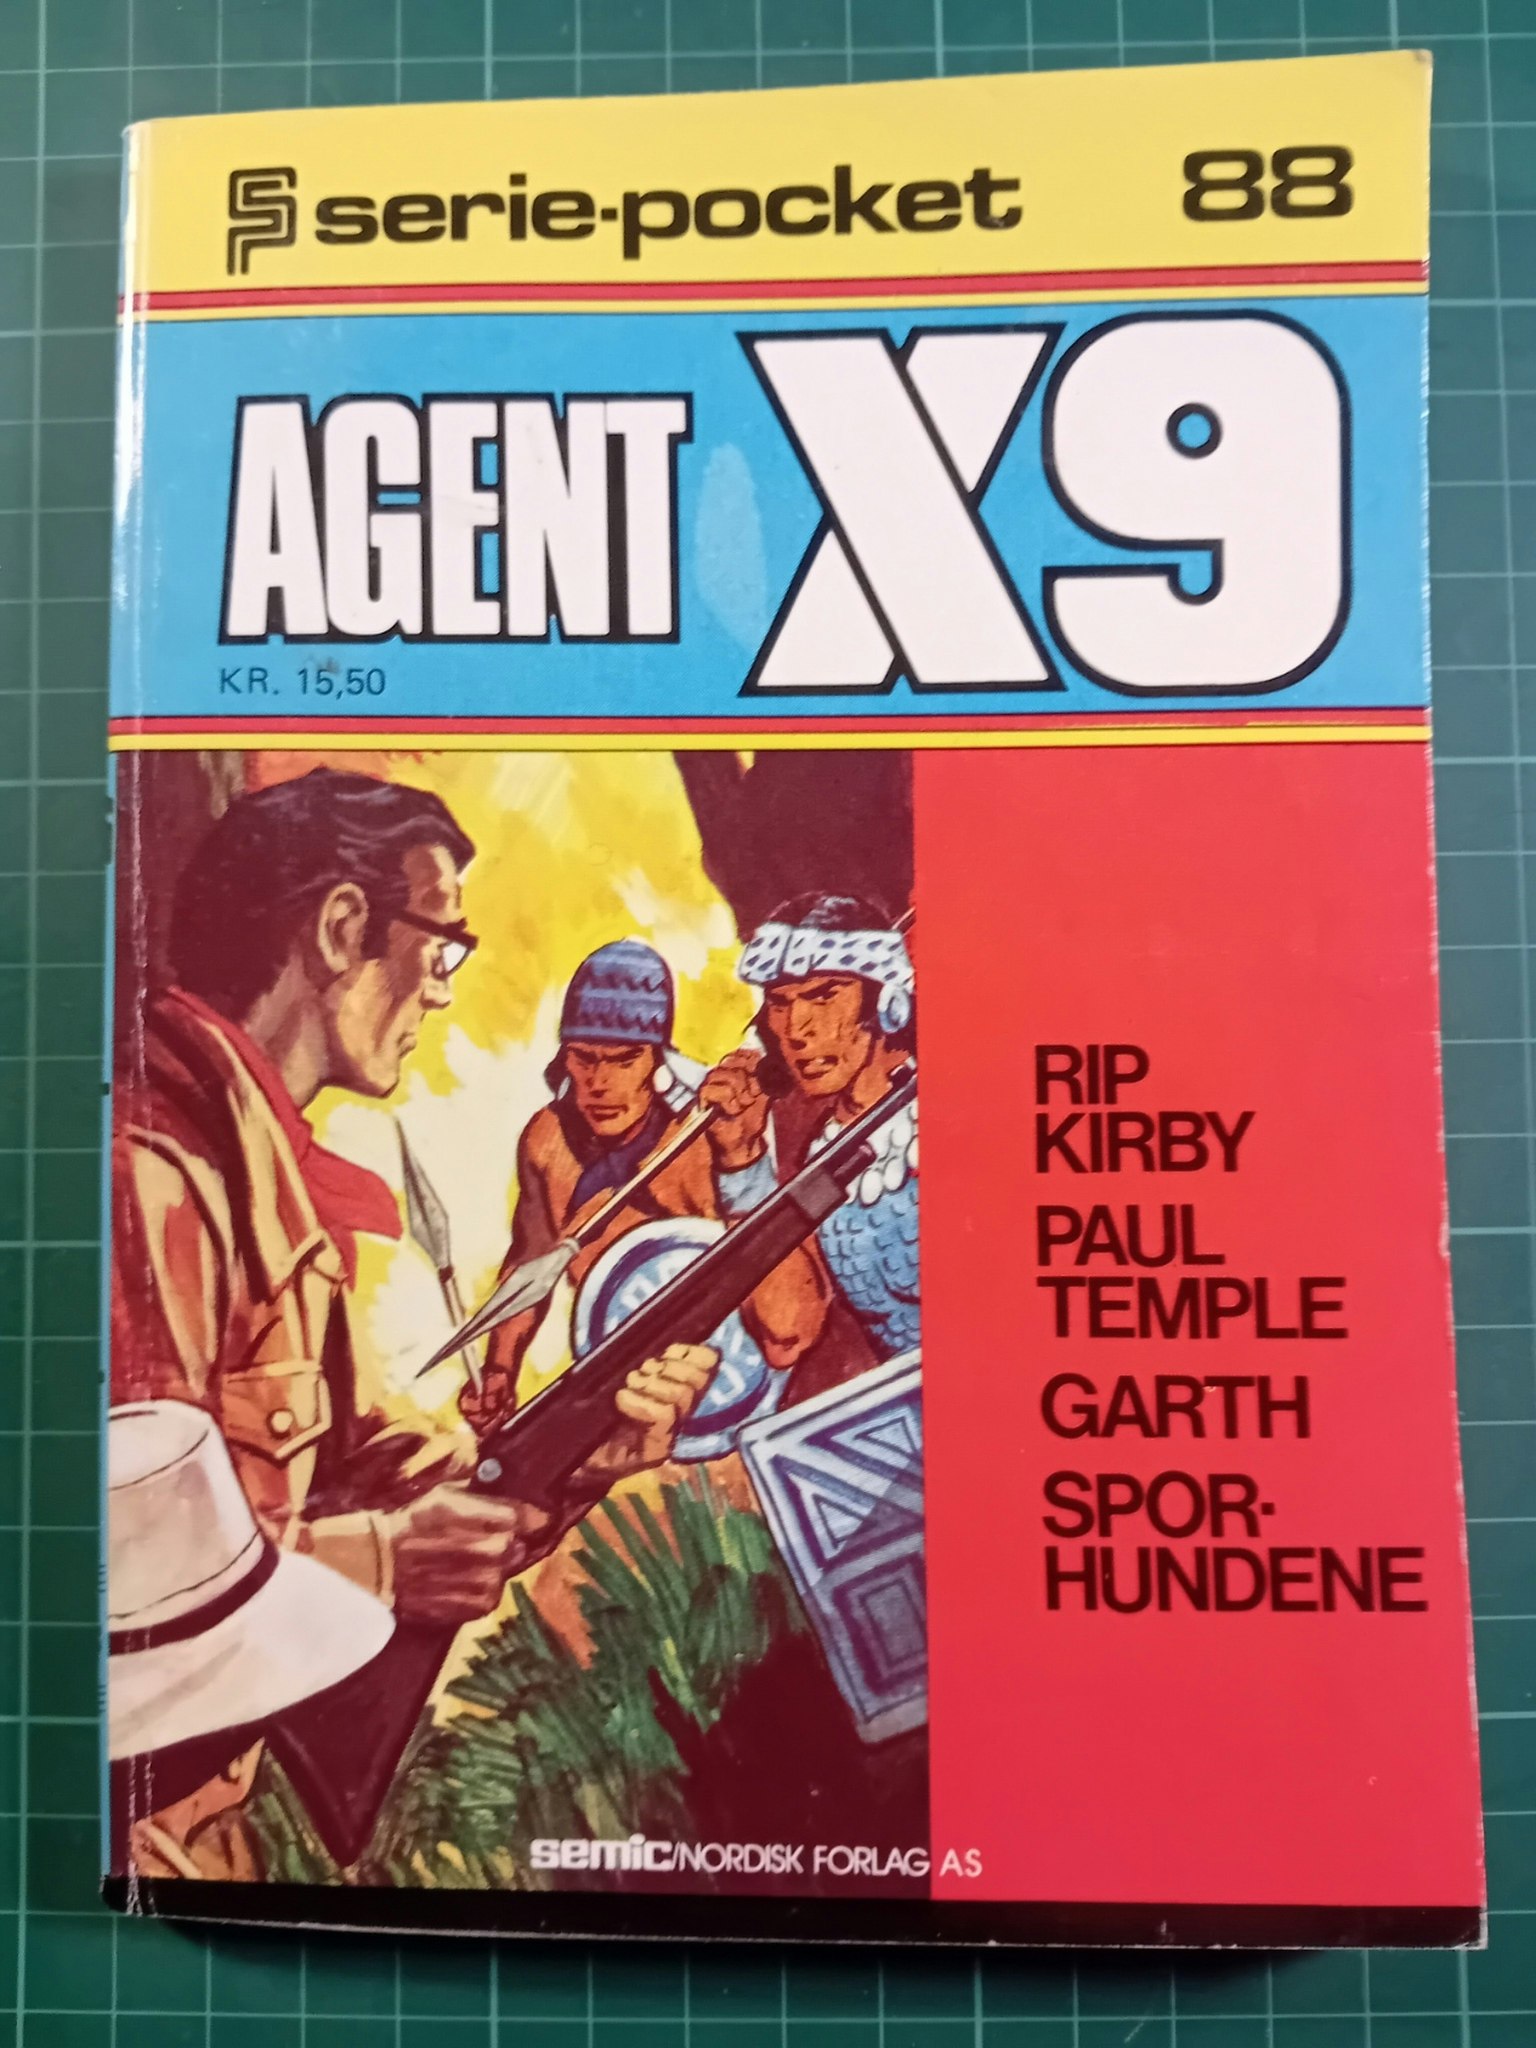 Serie-pocket 088 : Agent X9